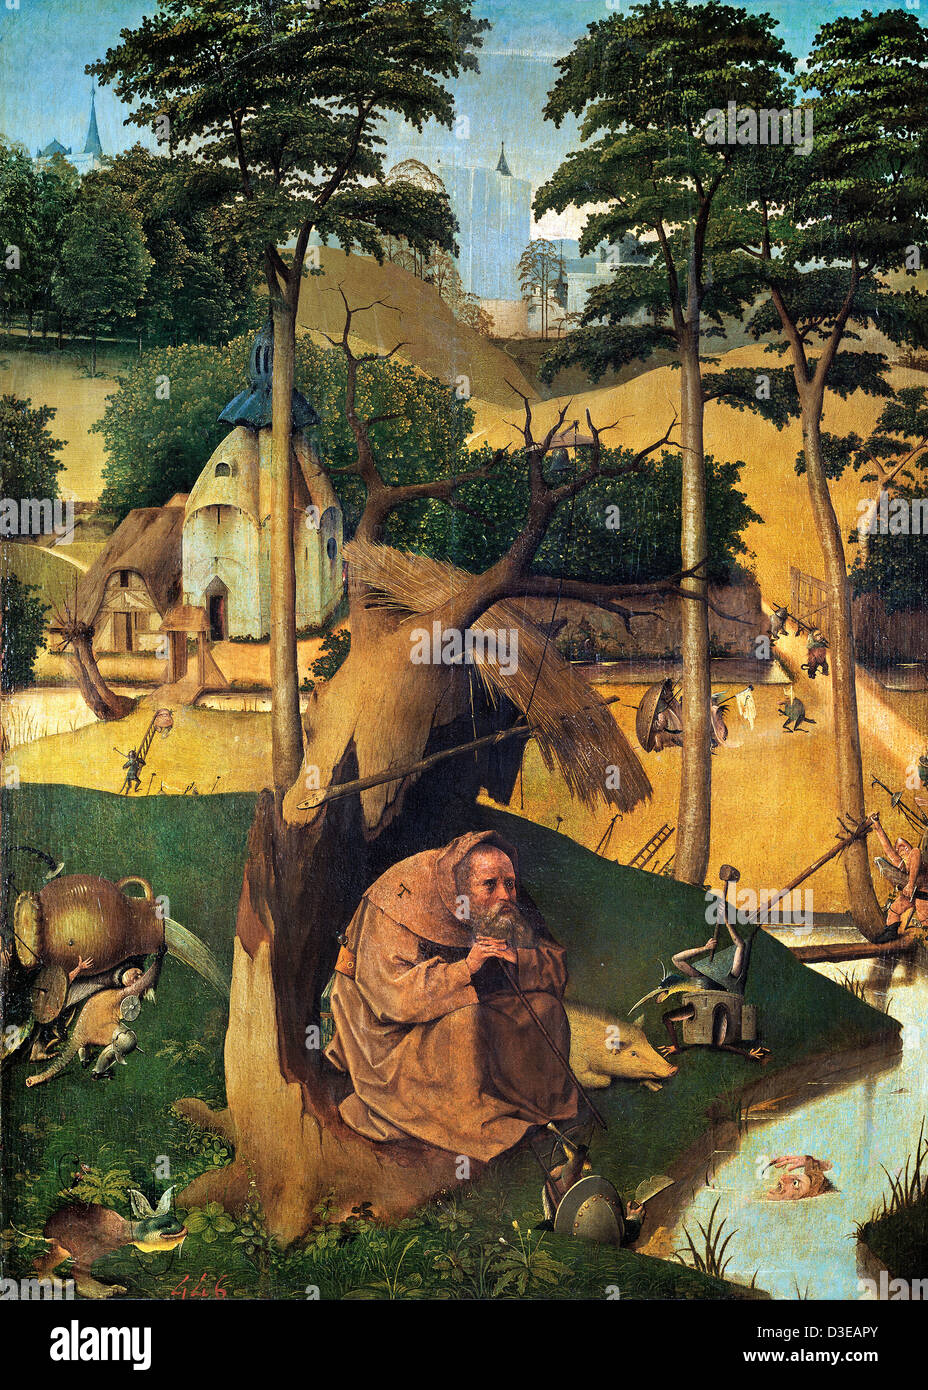 Hieronymus Bosch, The Temptation of St. Anthony 1500-1525 Öl auf Holz. Museo del Prado, Madrid, Spanien Stockfoto